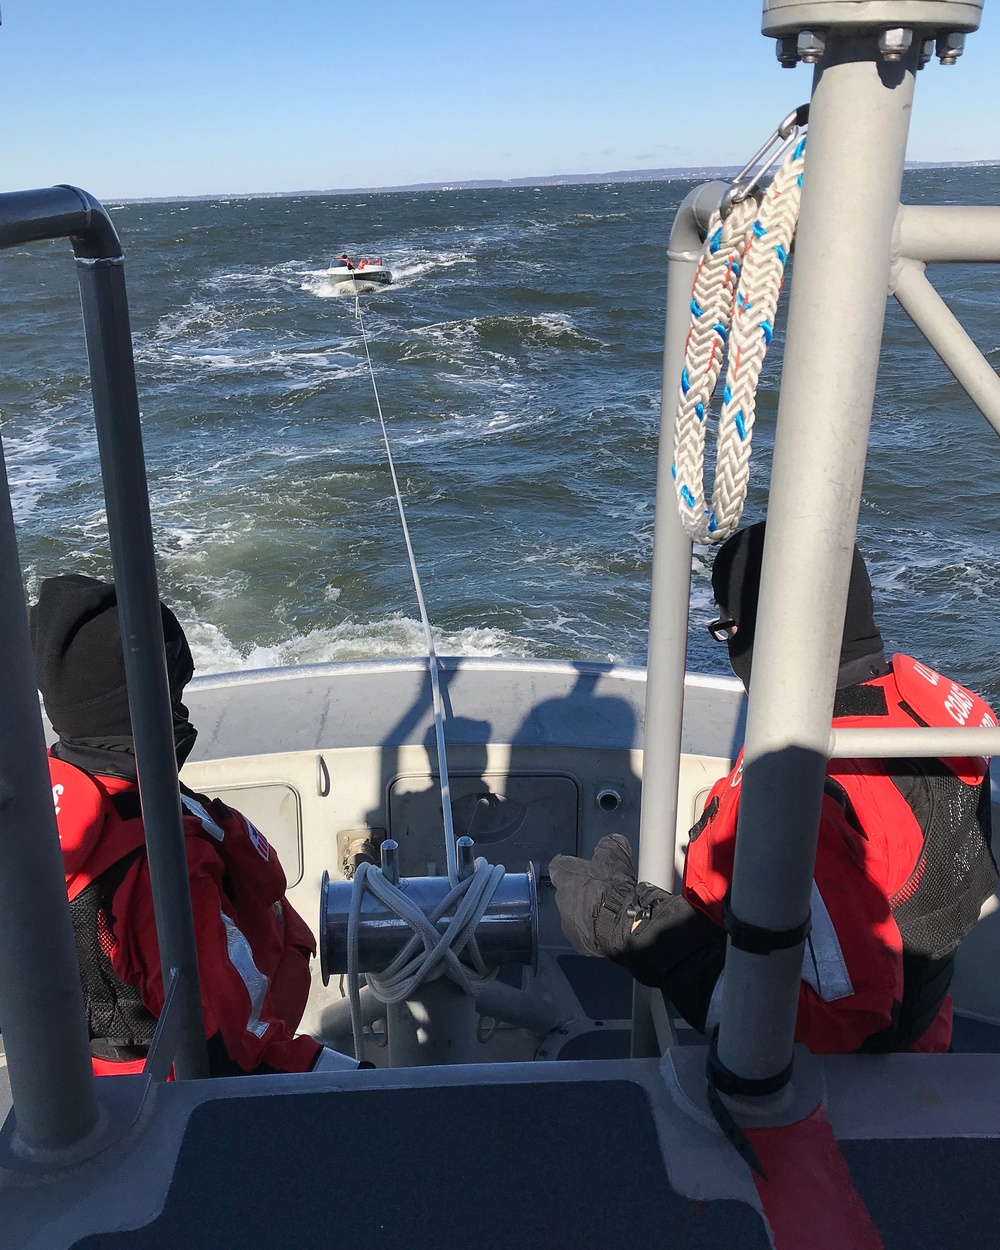 Coast Guard assists 3 disabled boaters near Sandy Hook Bay, NJ